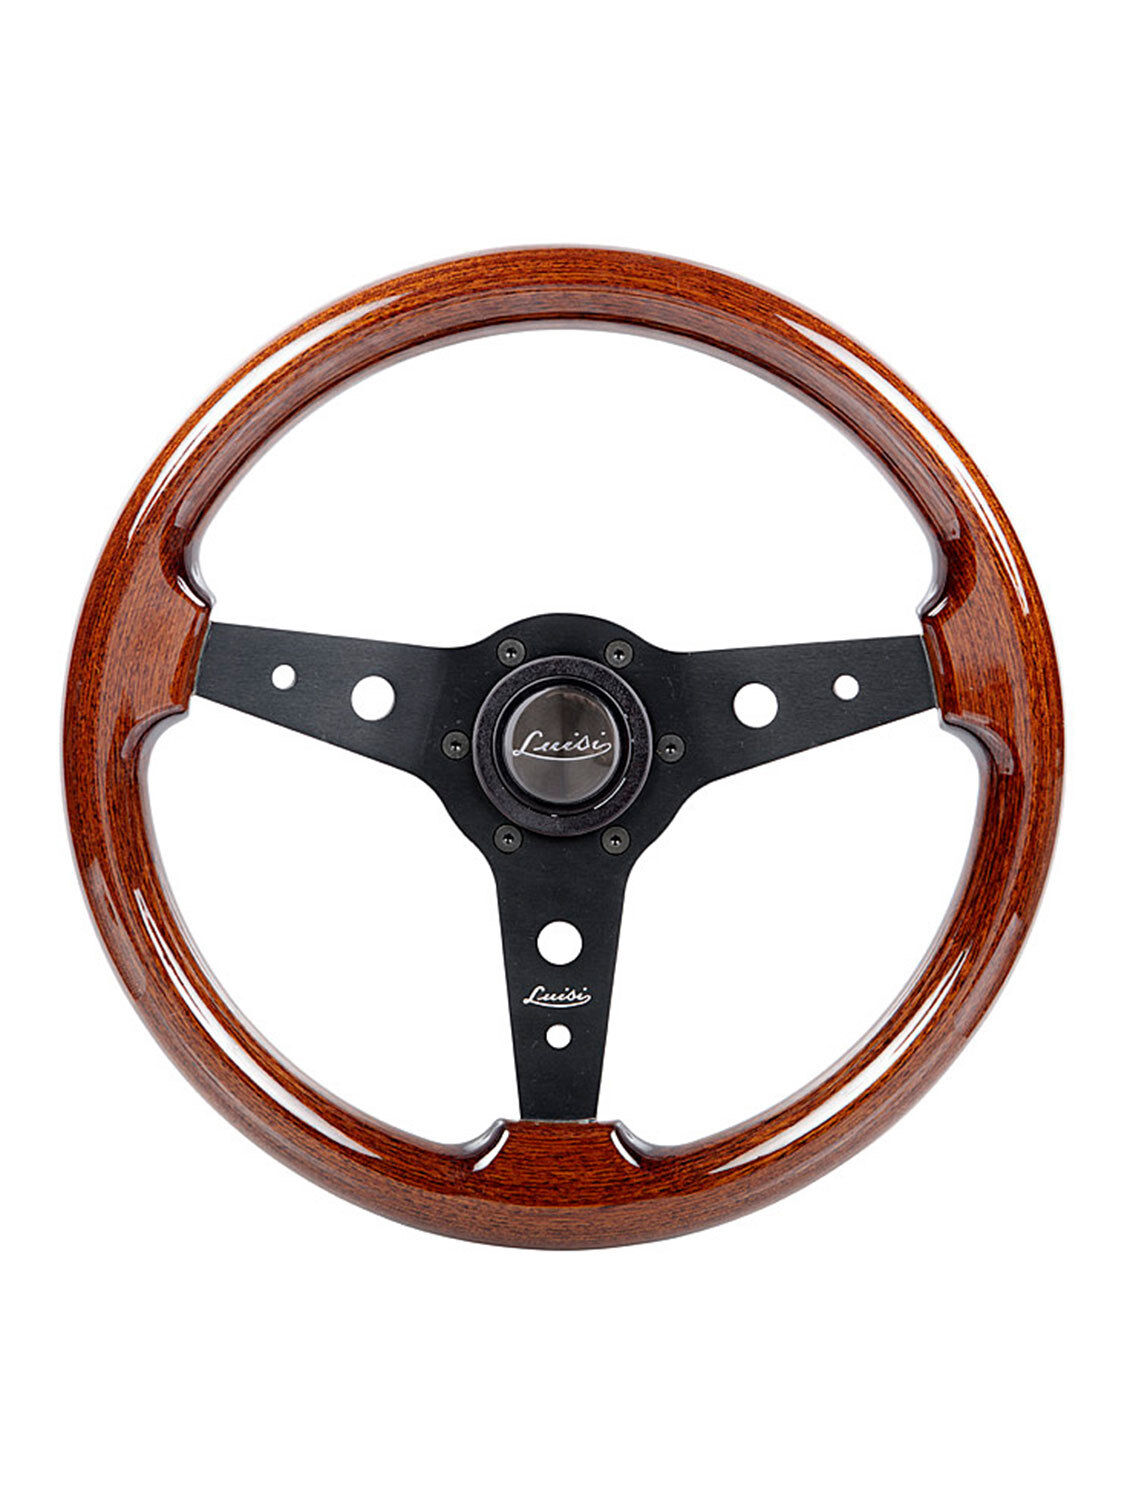 Luisi Italy Vintage Steering Wheel Montreal Mahogany Wood Black Spokes 340mm